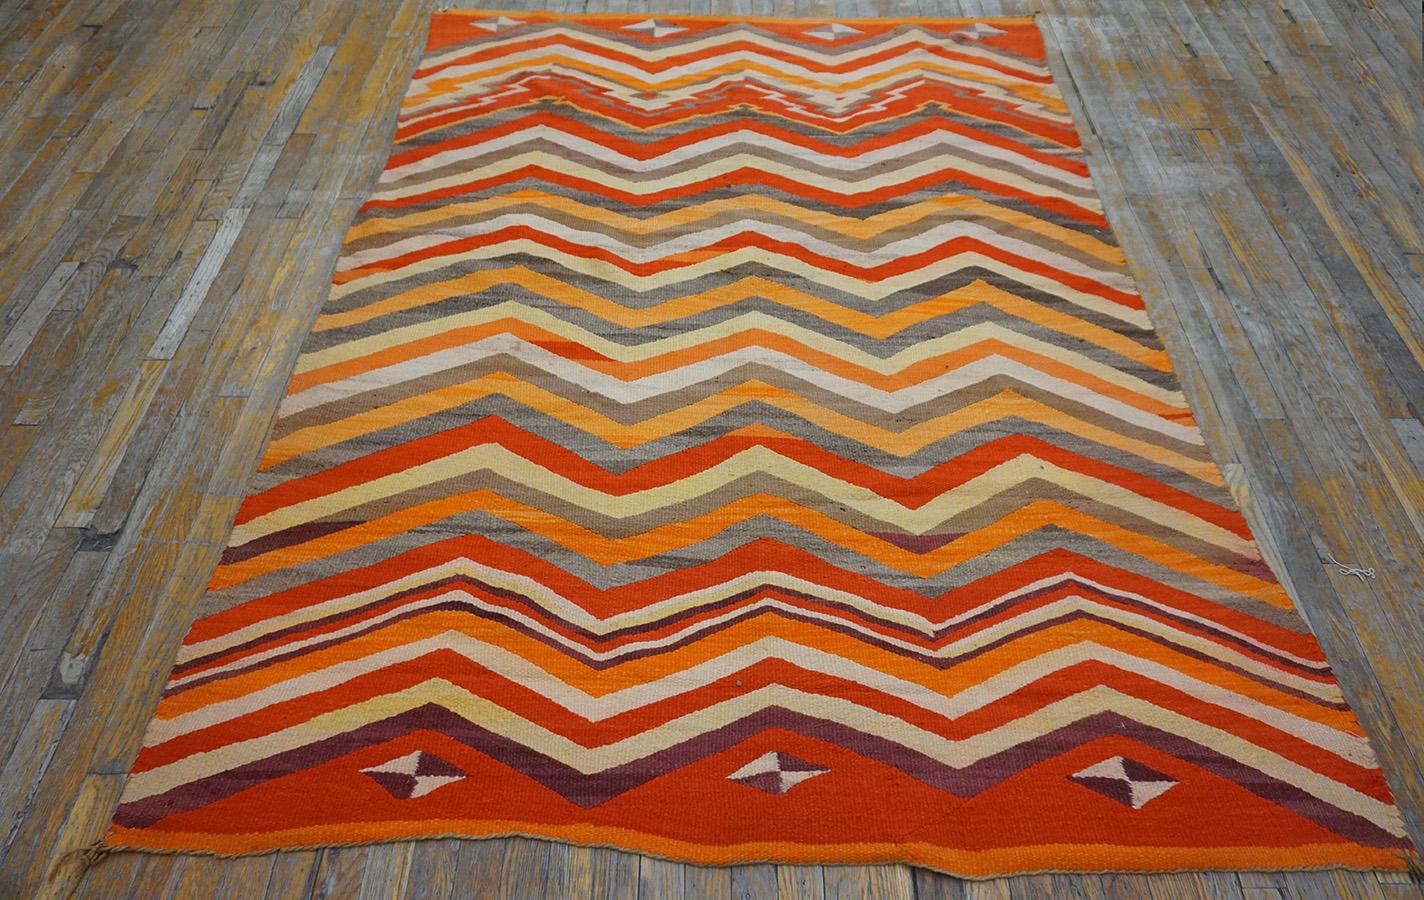 19th Century Transitional Period American Navajo Carpet ( 5'5